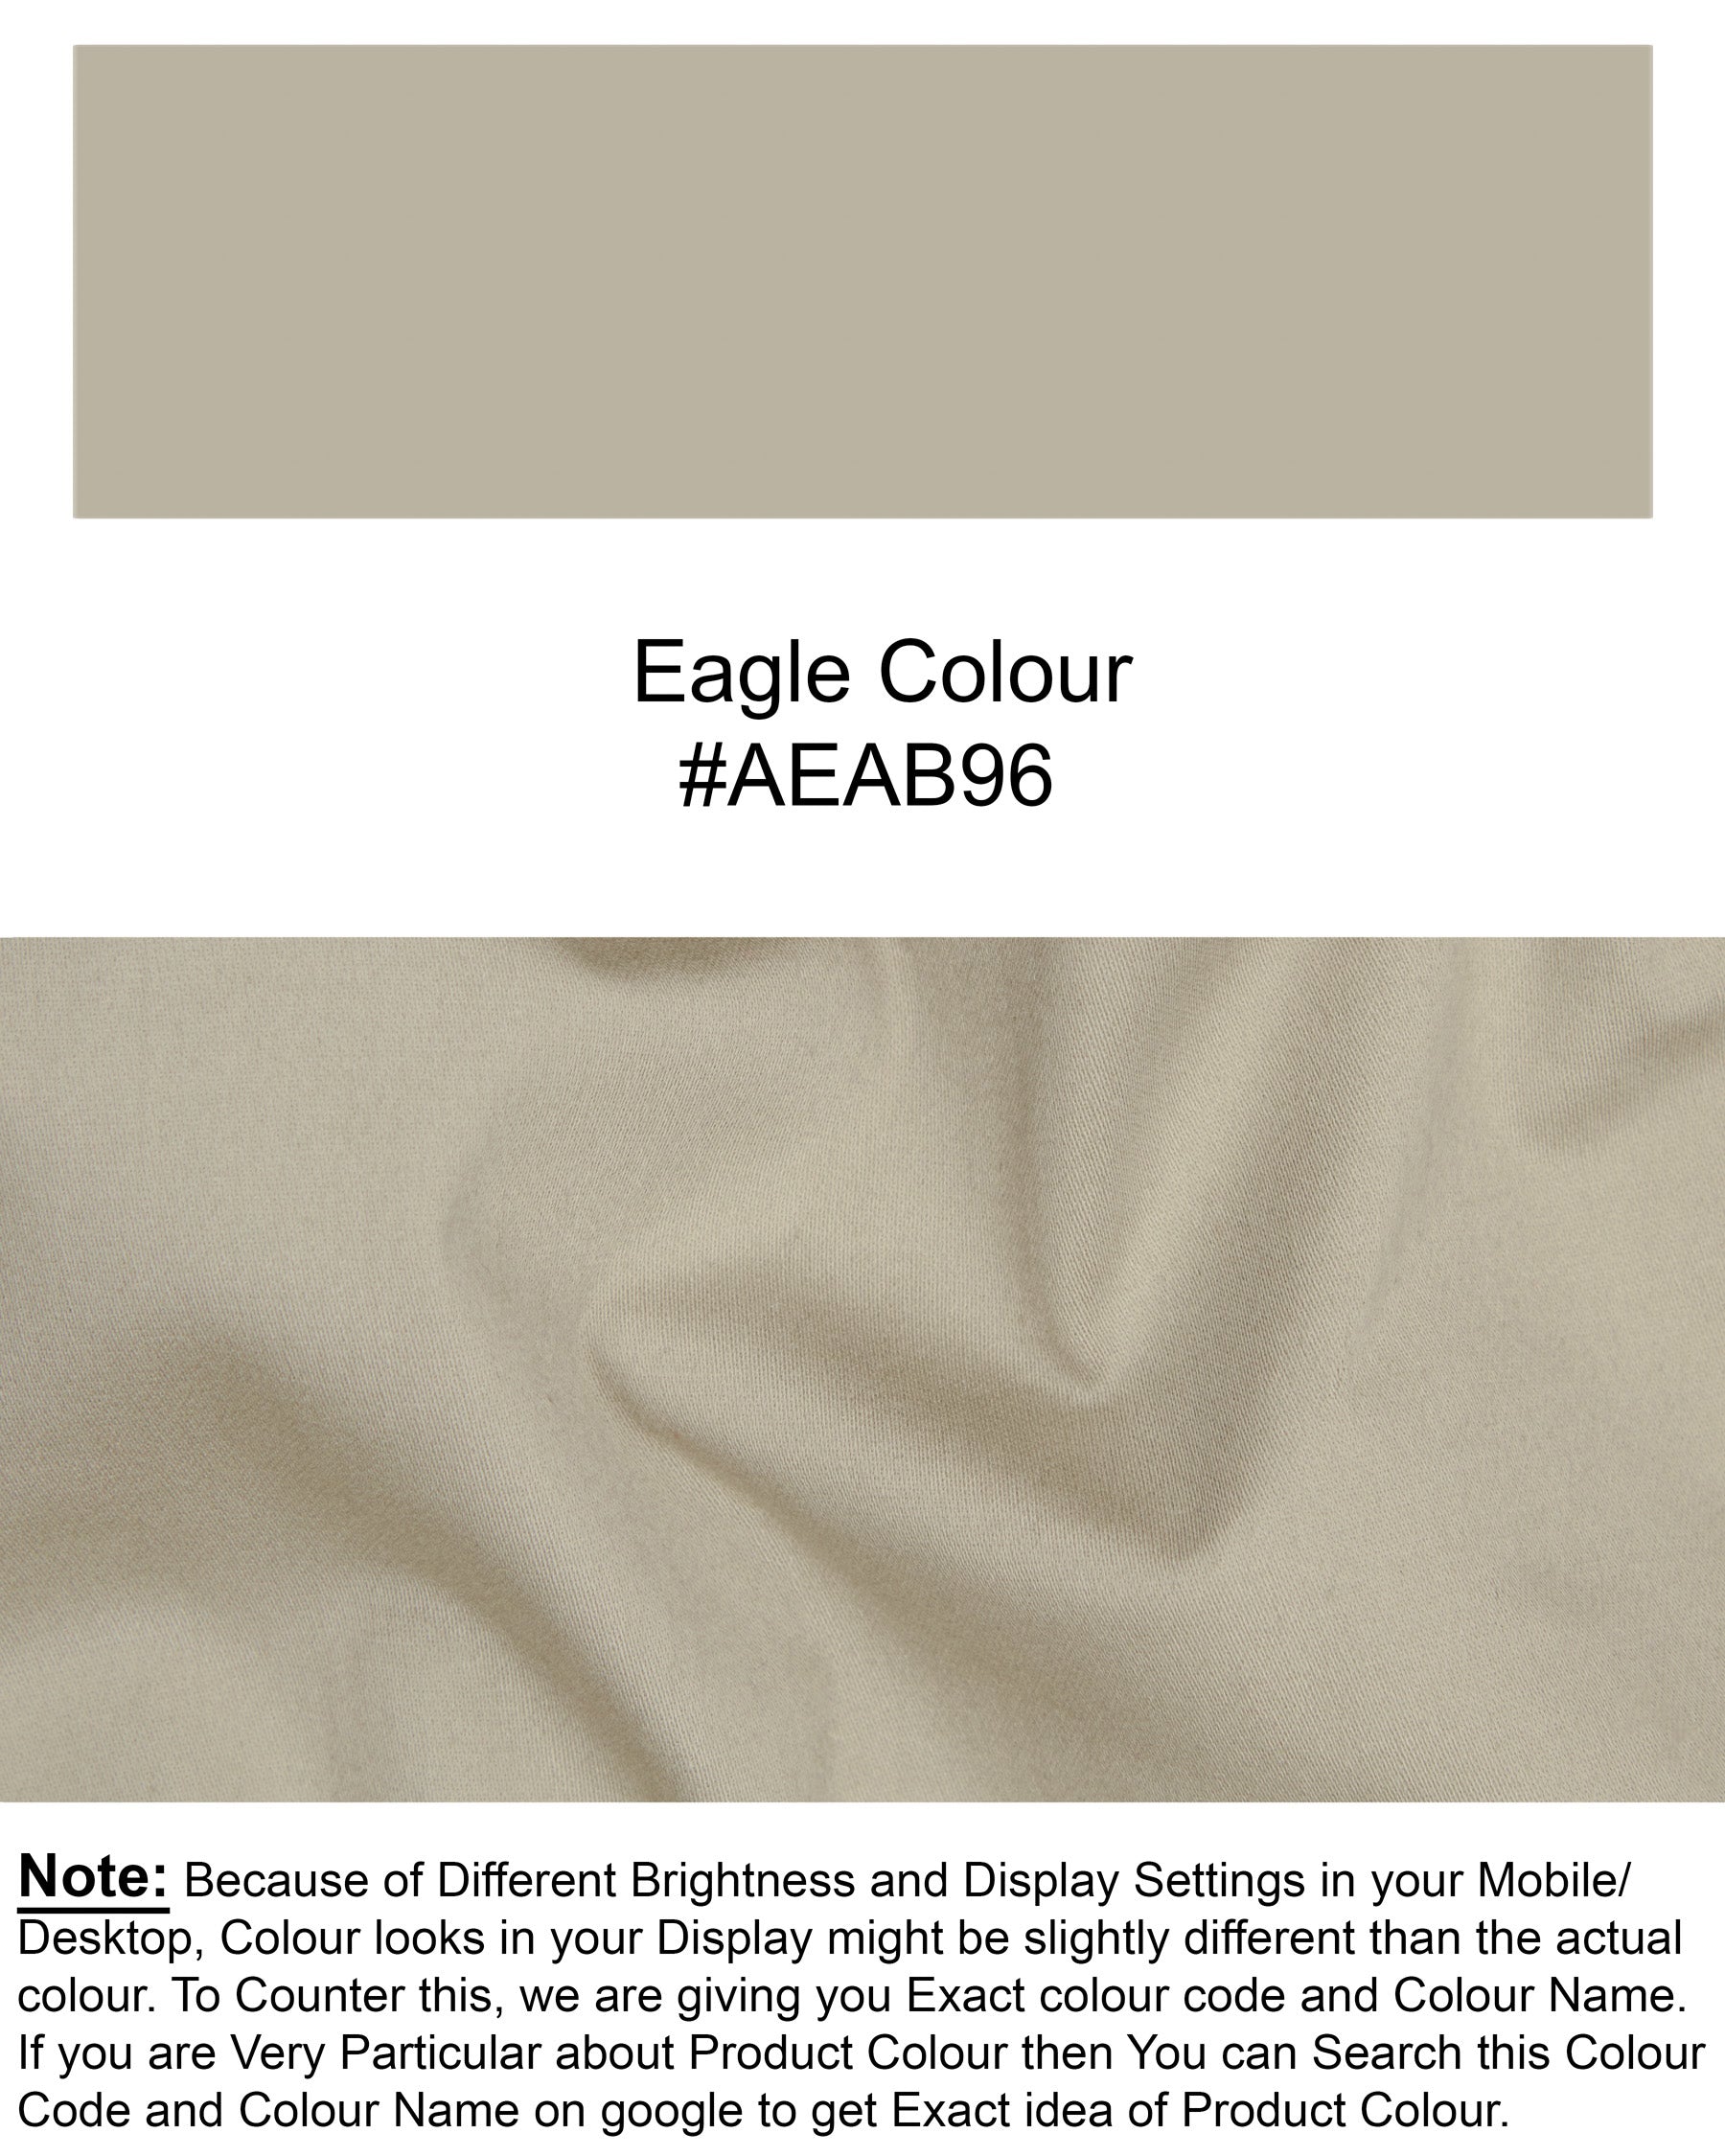 Eagle Grey Double Breasted Premium Cotton Blazer BL1267-DB-42, BL1267-DB-44, BL1267-DB-46, BL1267-DB-48, BL1267-DB-50, BL1267-DB-52, BL1267-DB-54, BL1267-DB-36, BL1267-DB-38, BL1267-DB-56, BL1267-DB-58, BL1267-DB-40, BL1267-DB-60